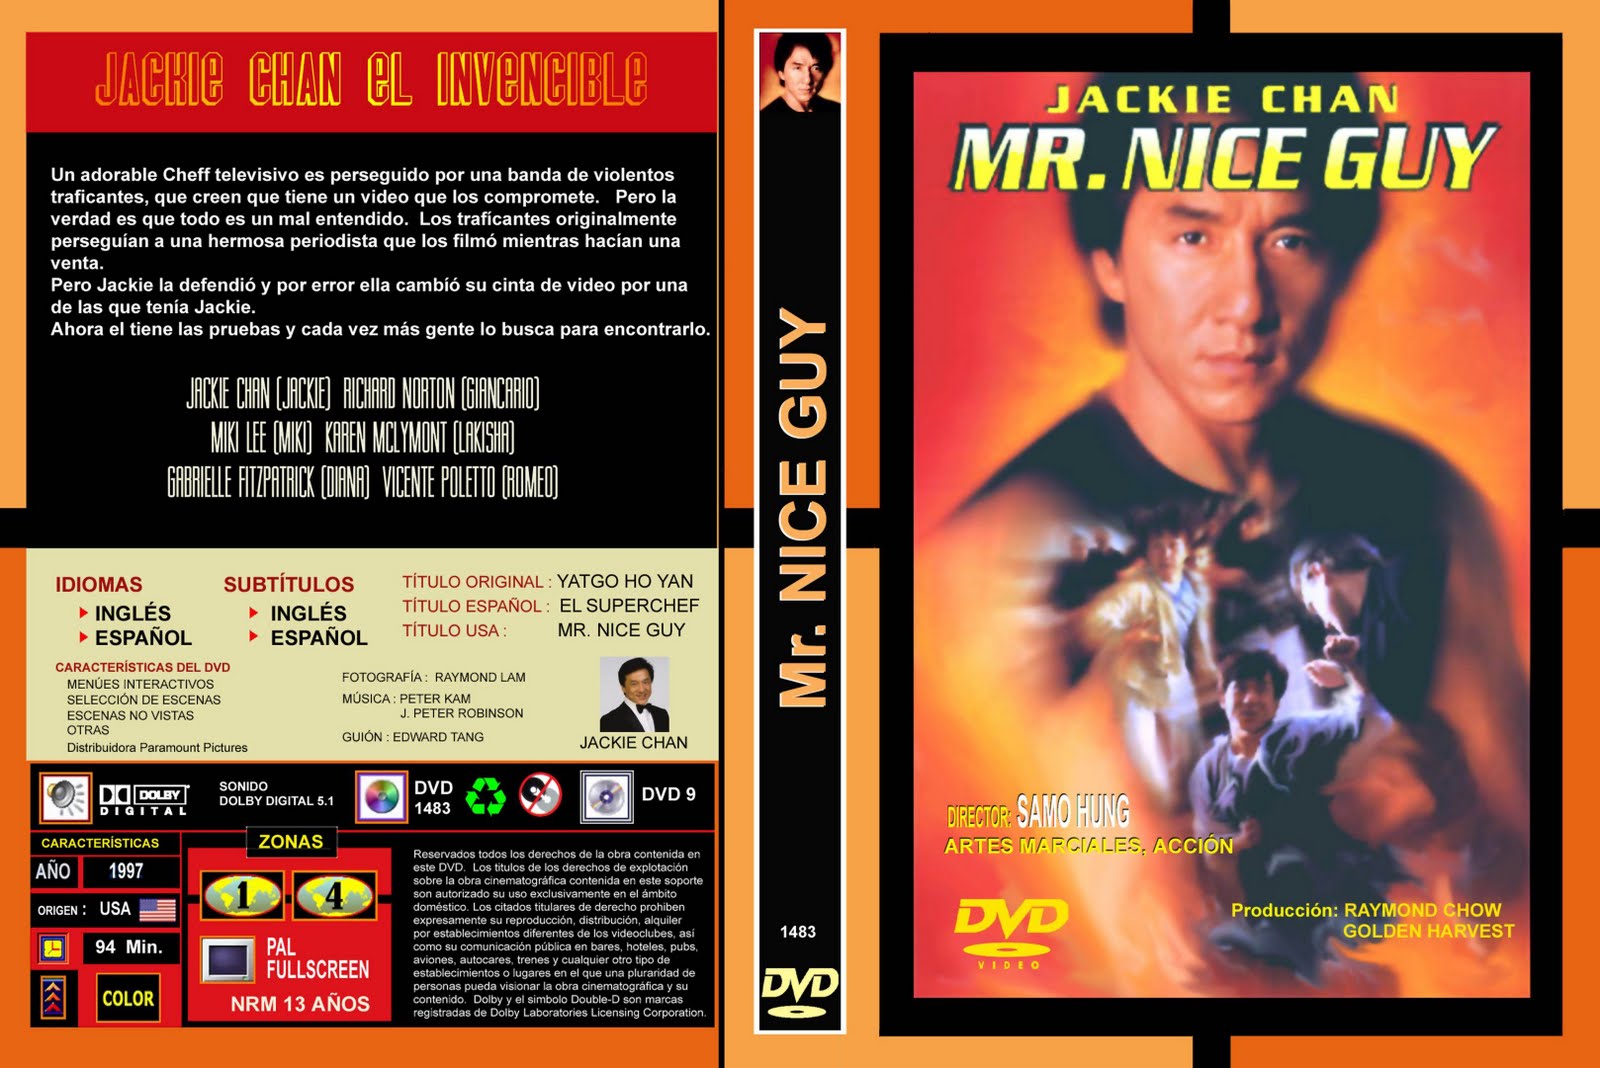 Peliculas DVD: Mr. Nice Guy, Dvdfull latino. 